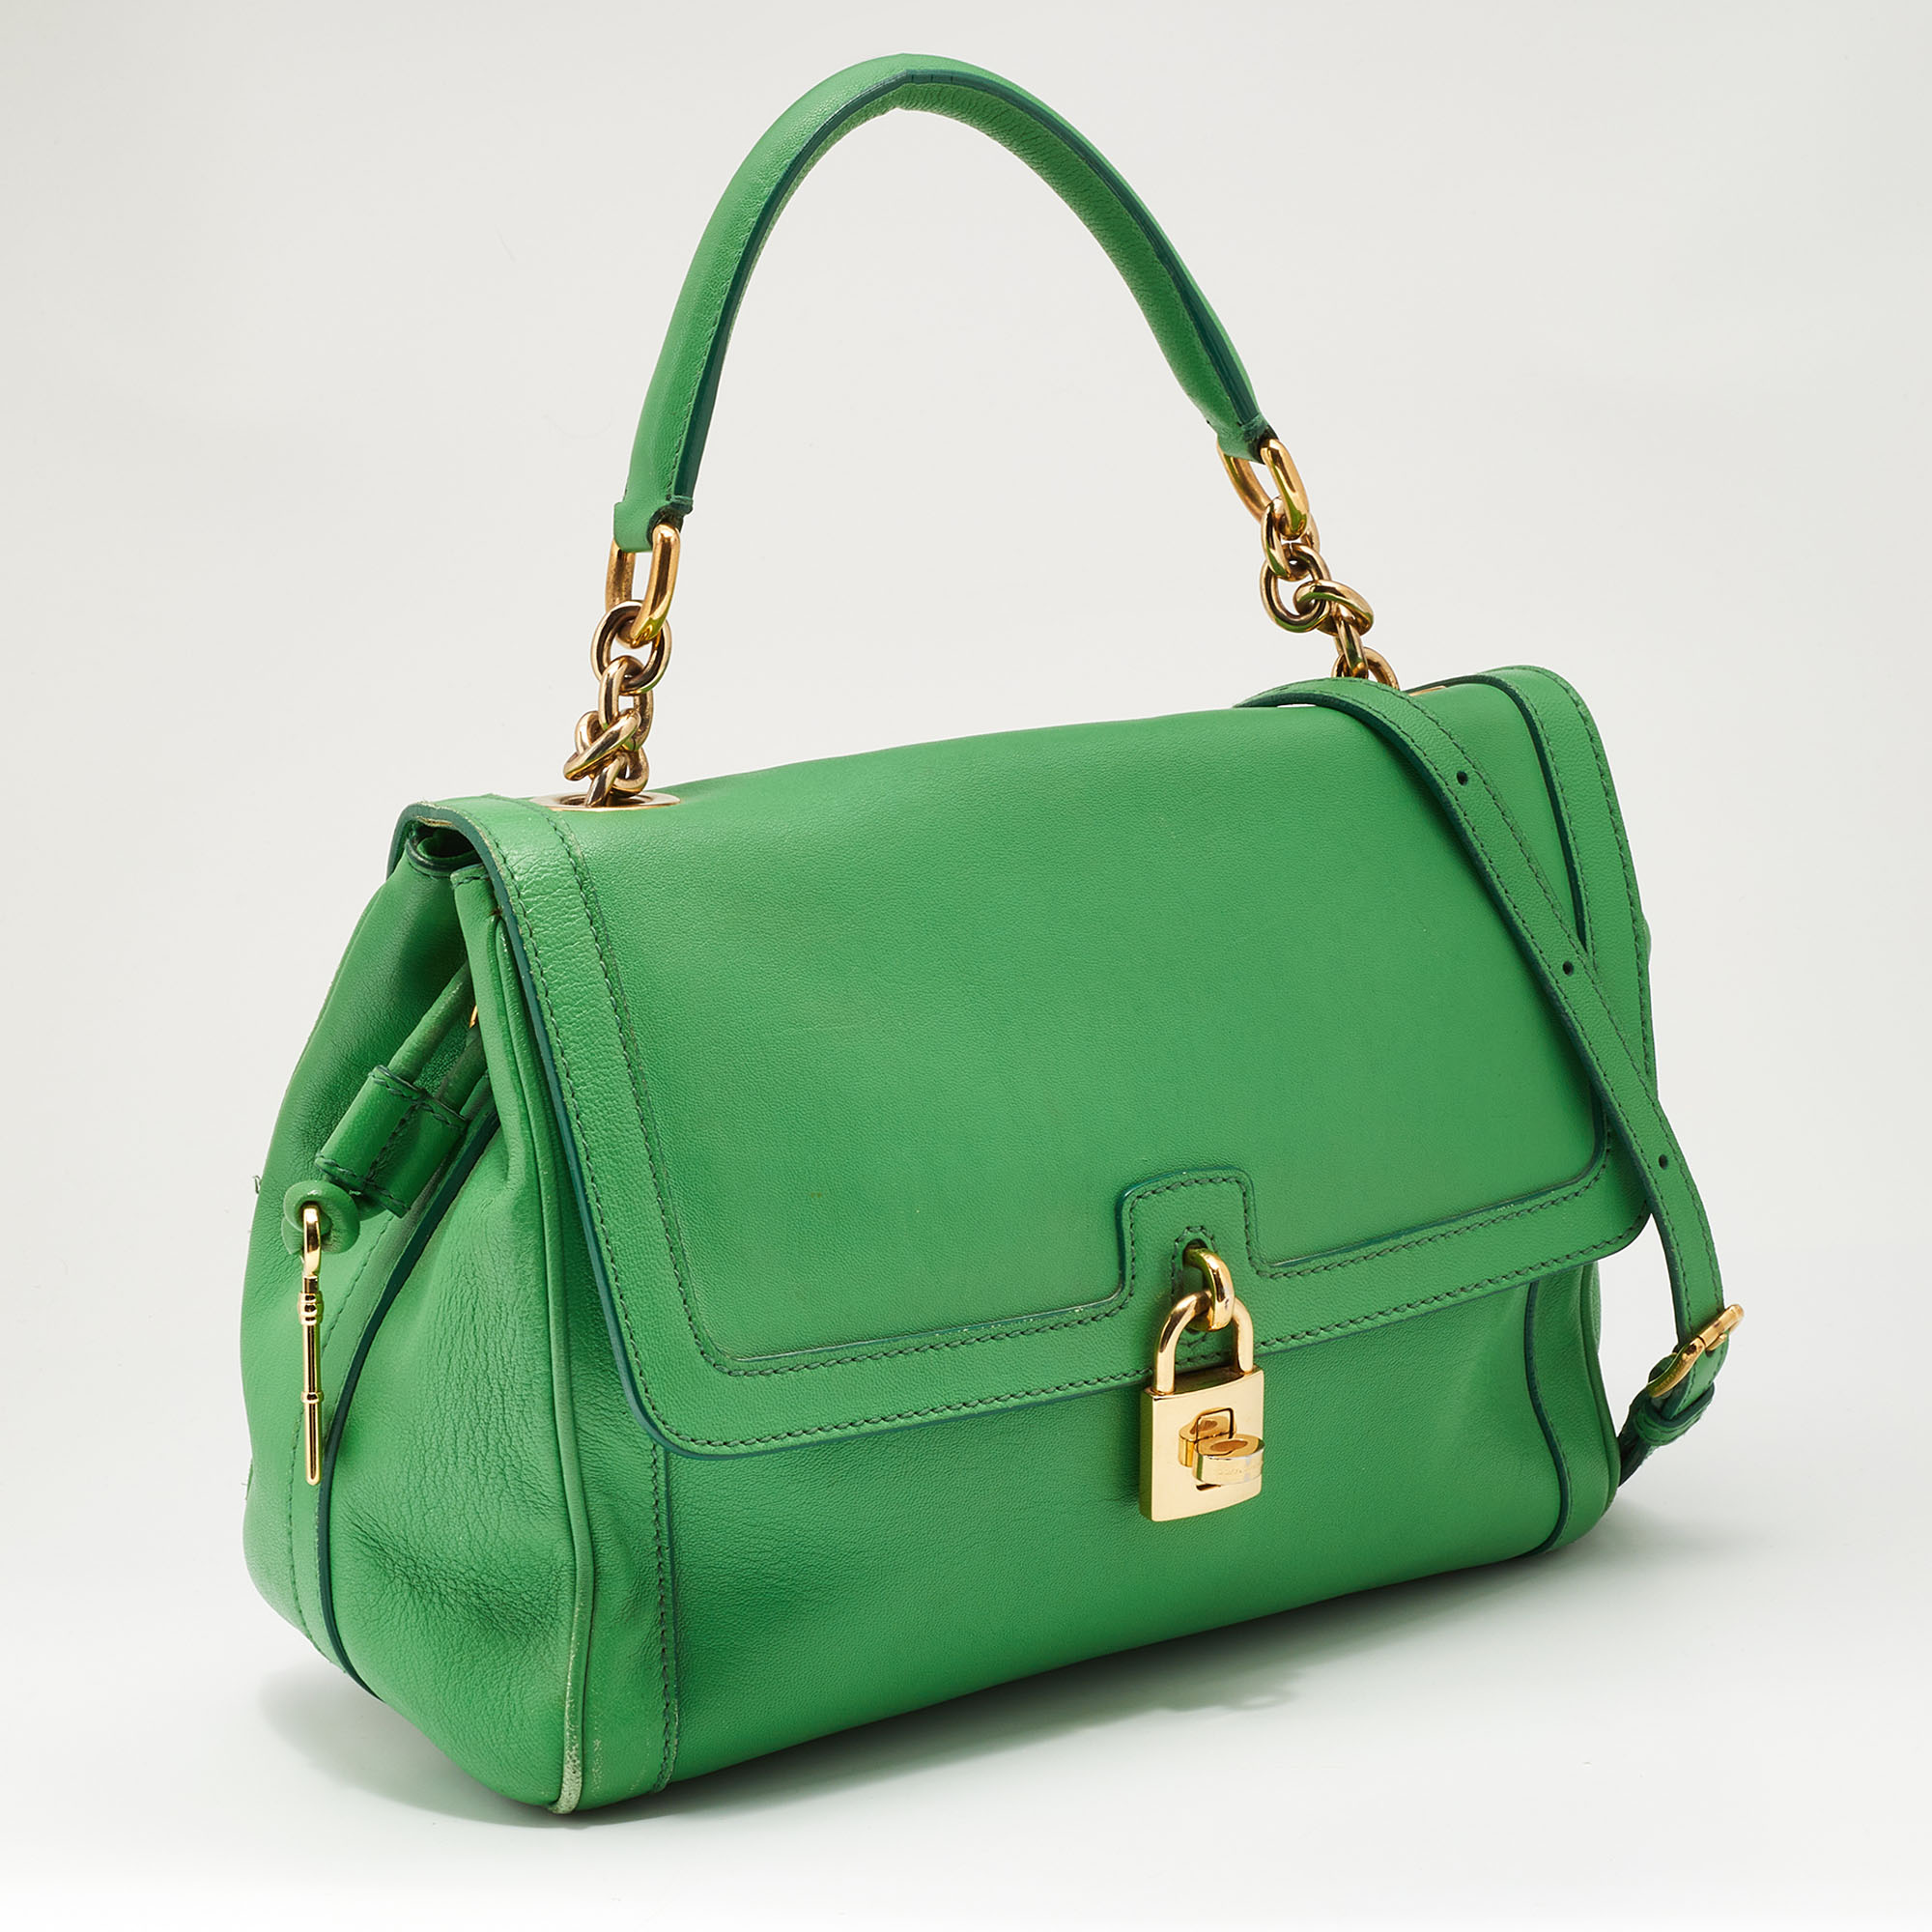 Dolce & Gabbana Green Leather Padlock Top Handle Bag